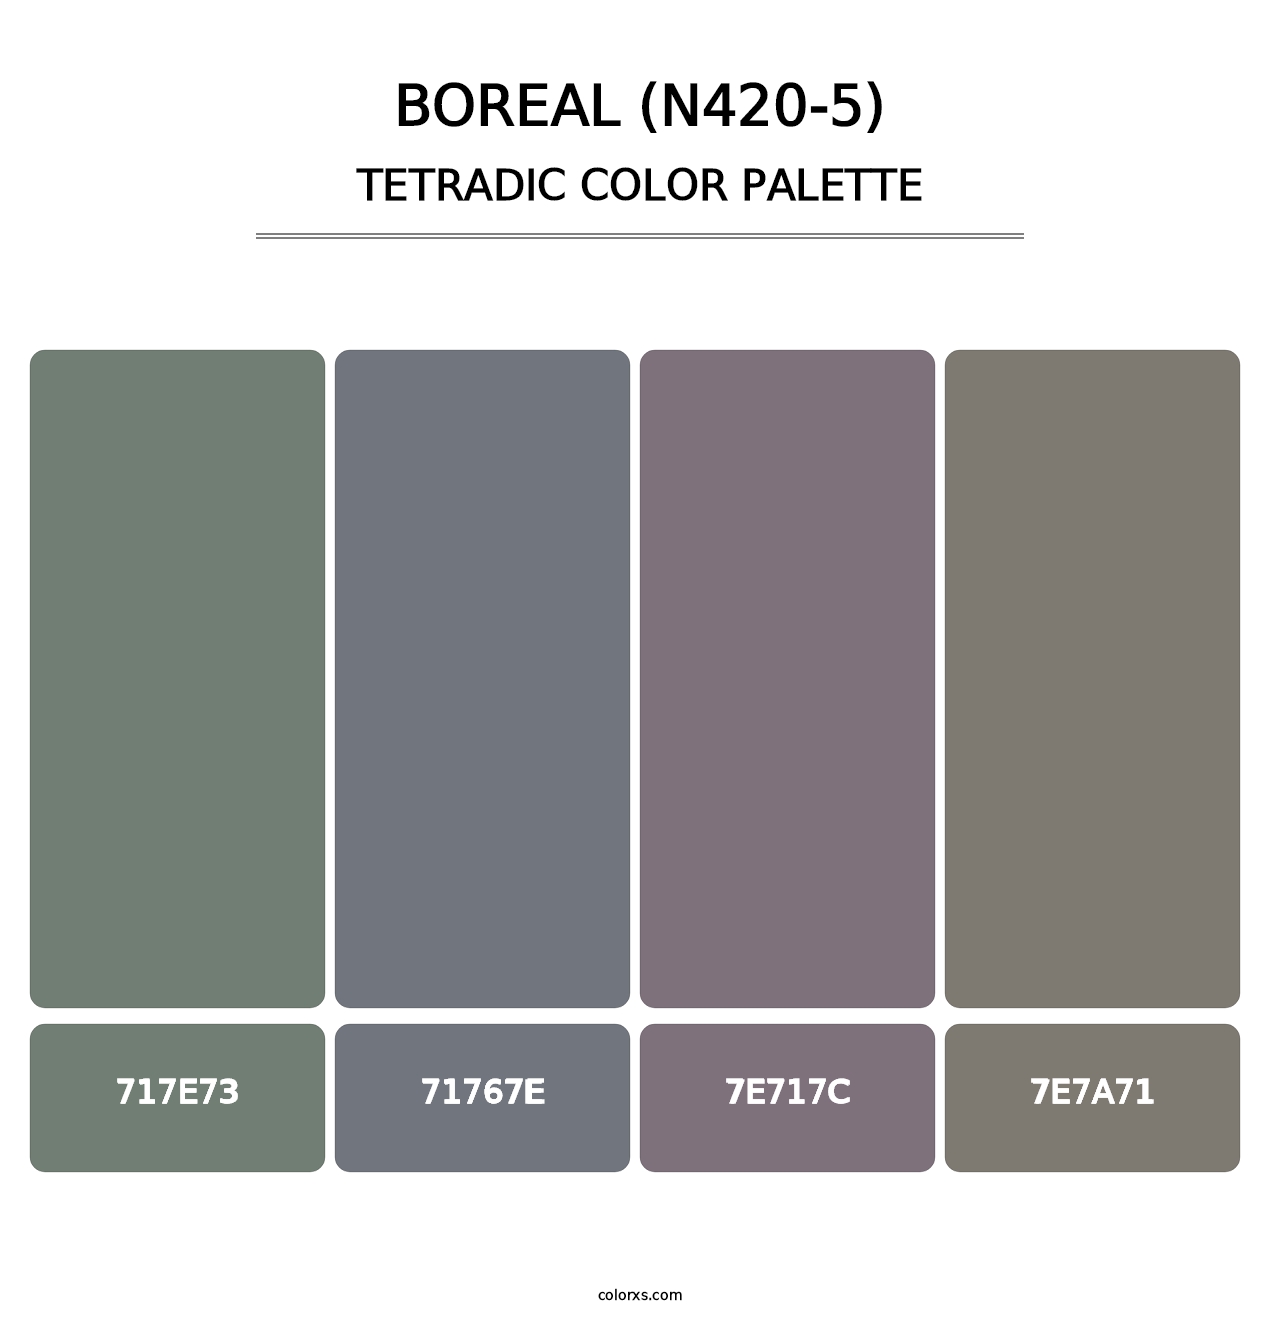 Boreal (N420-5) - Tetradic Color Palette